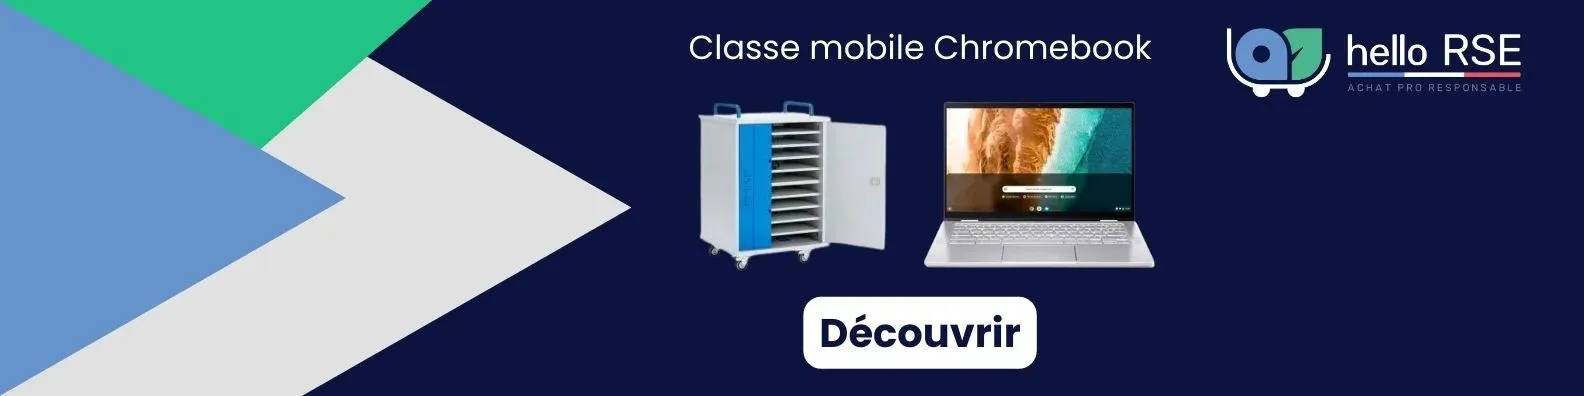 classe mobile chromebook.webp